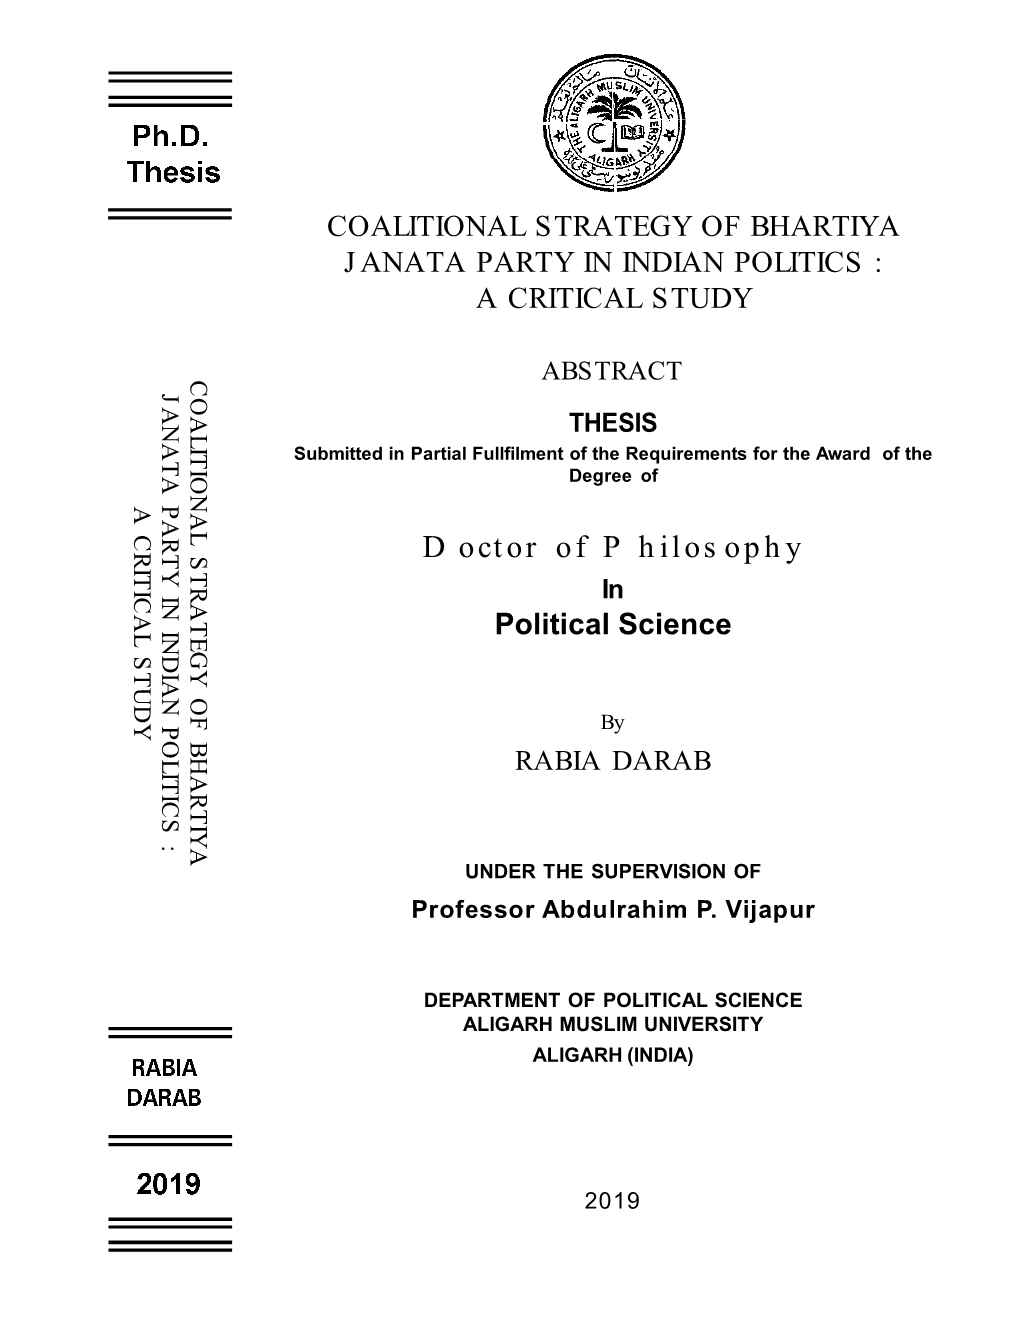 Coalitional Strategy of Bhartiya Janata Party in Indian Politics : a Critical Study